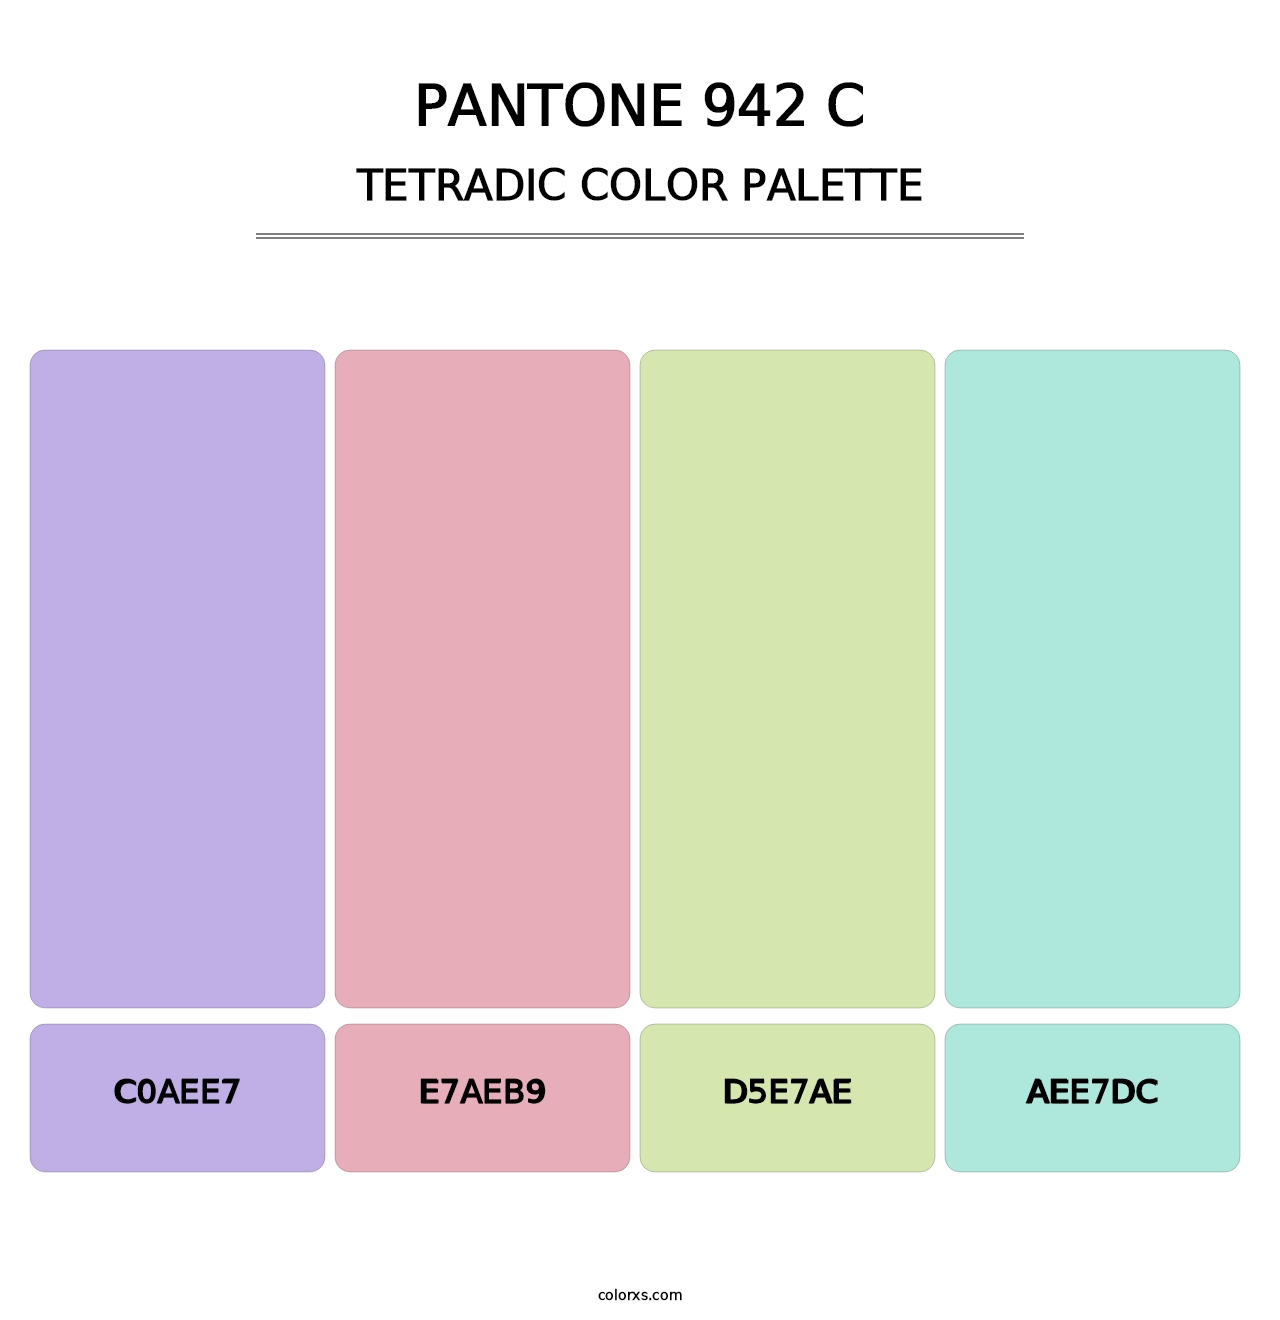 PANTONE 942 C - Tetradic Color Palette